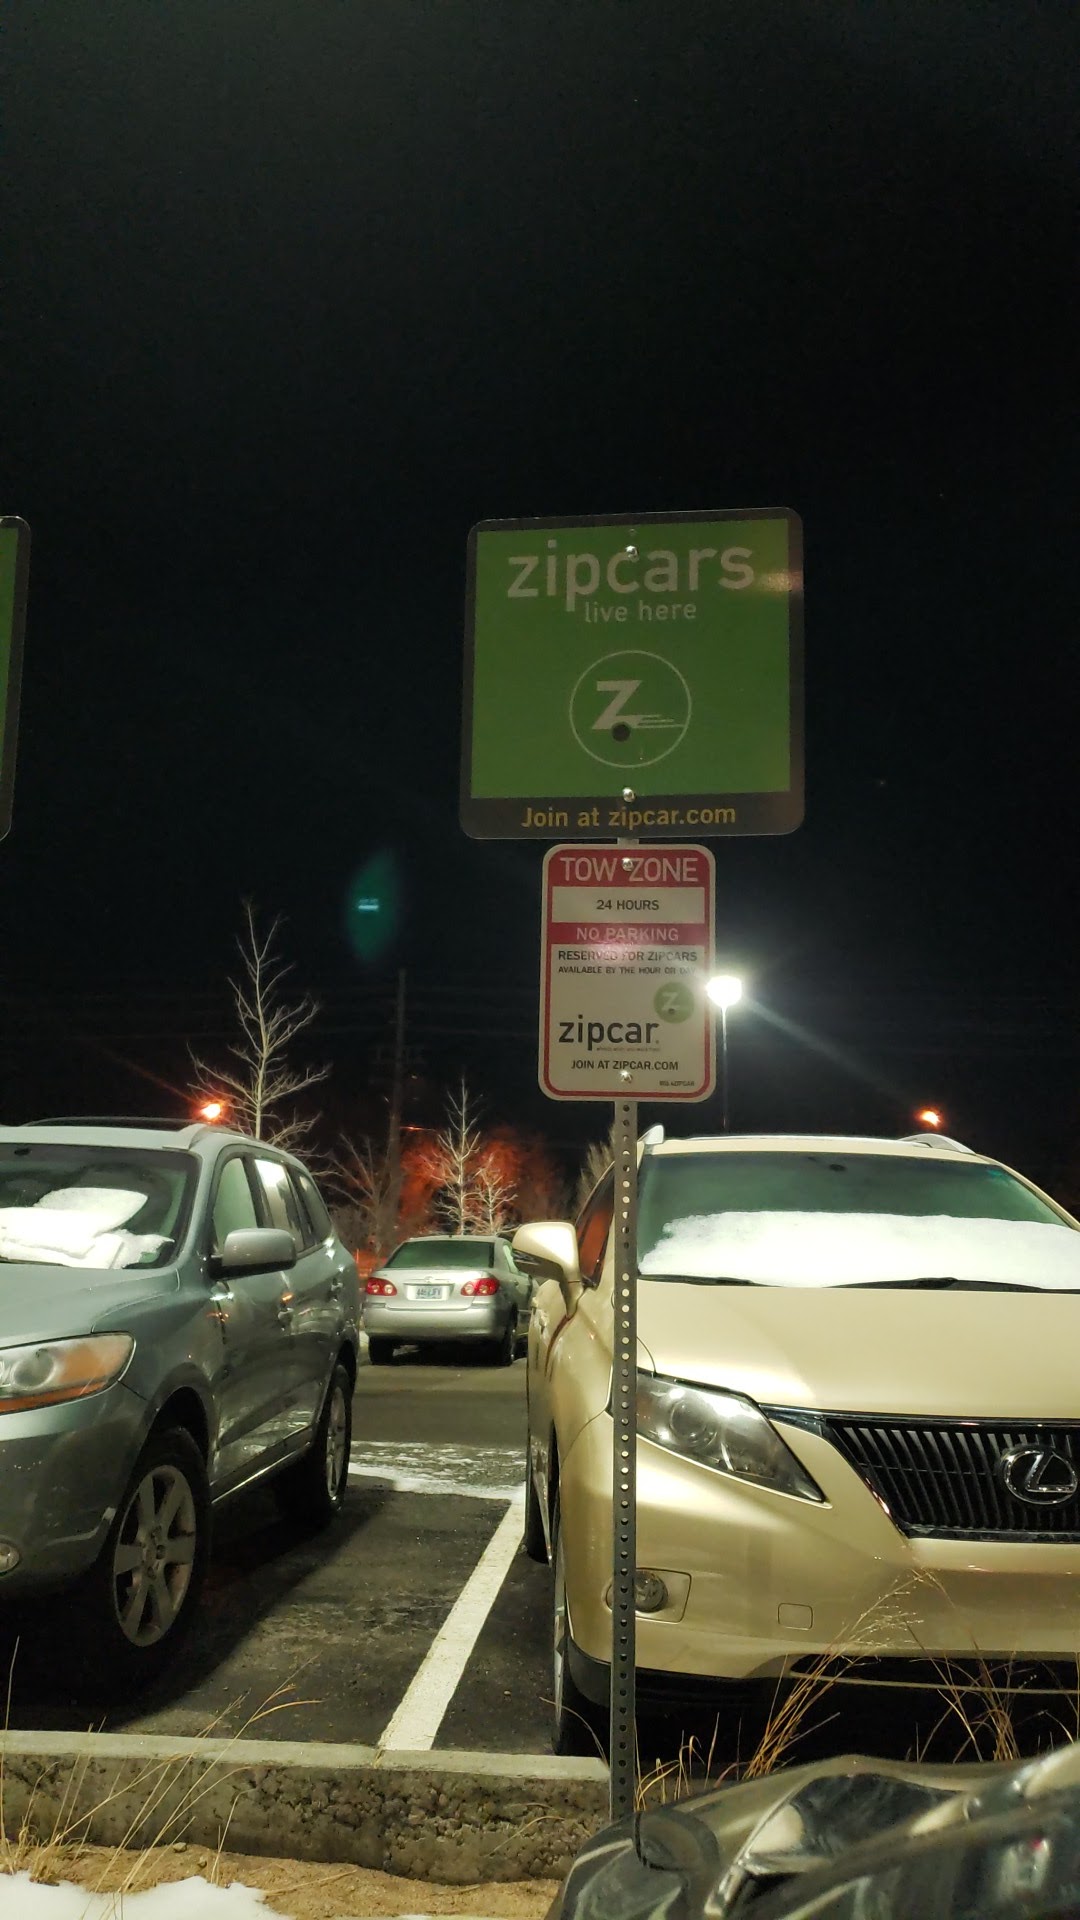 Zipcar